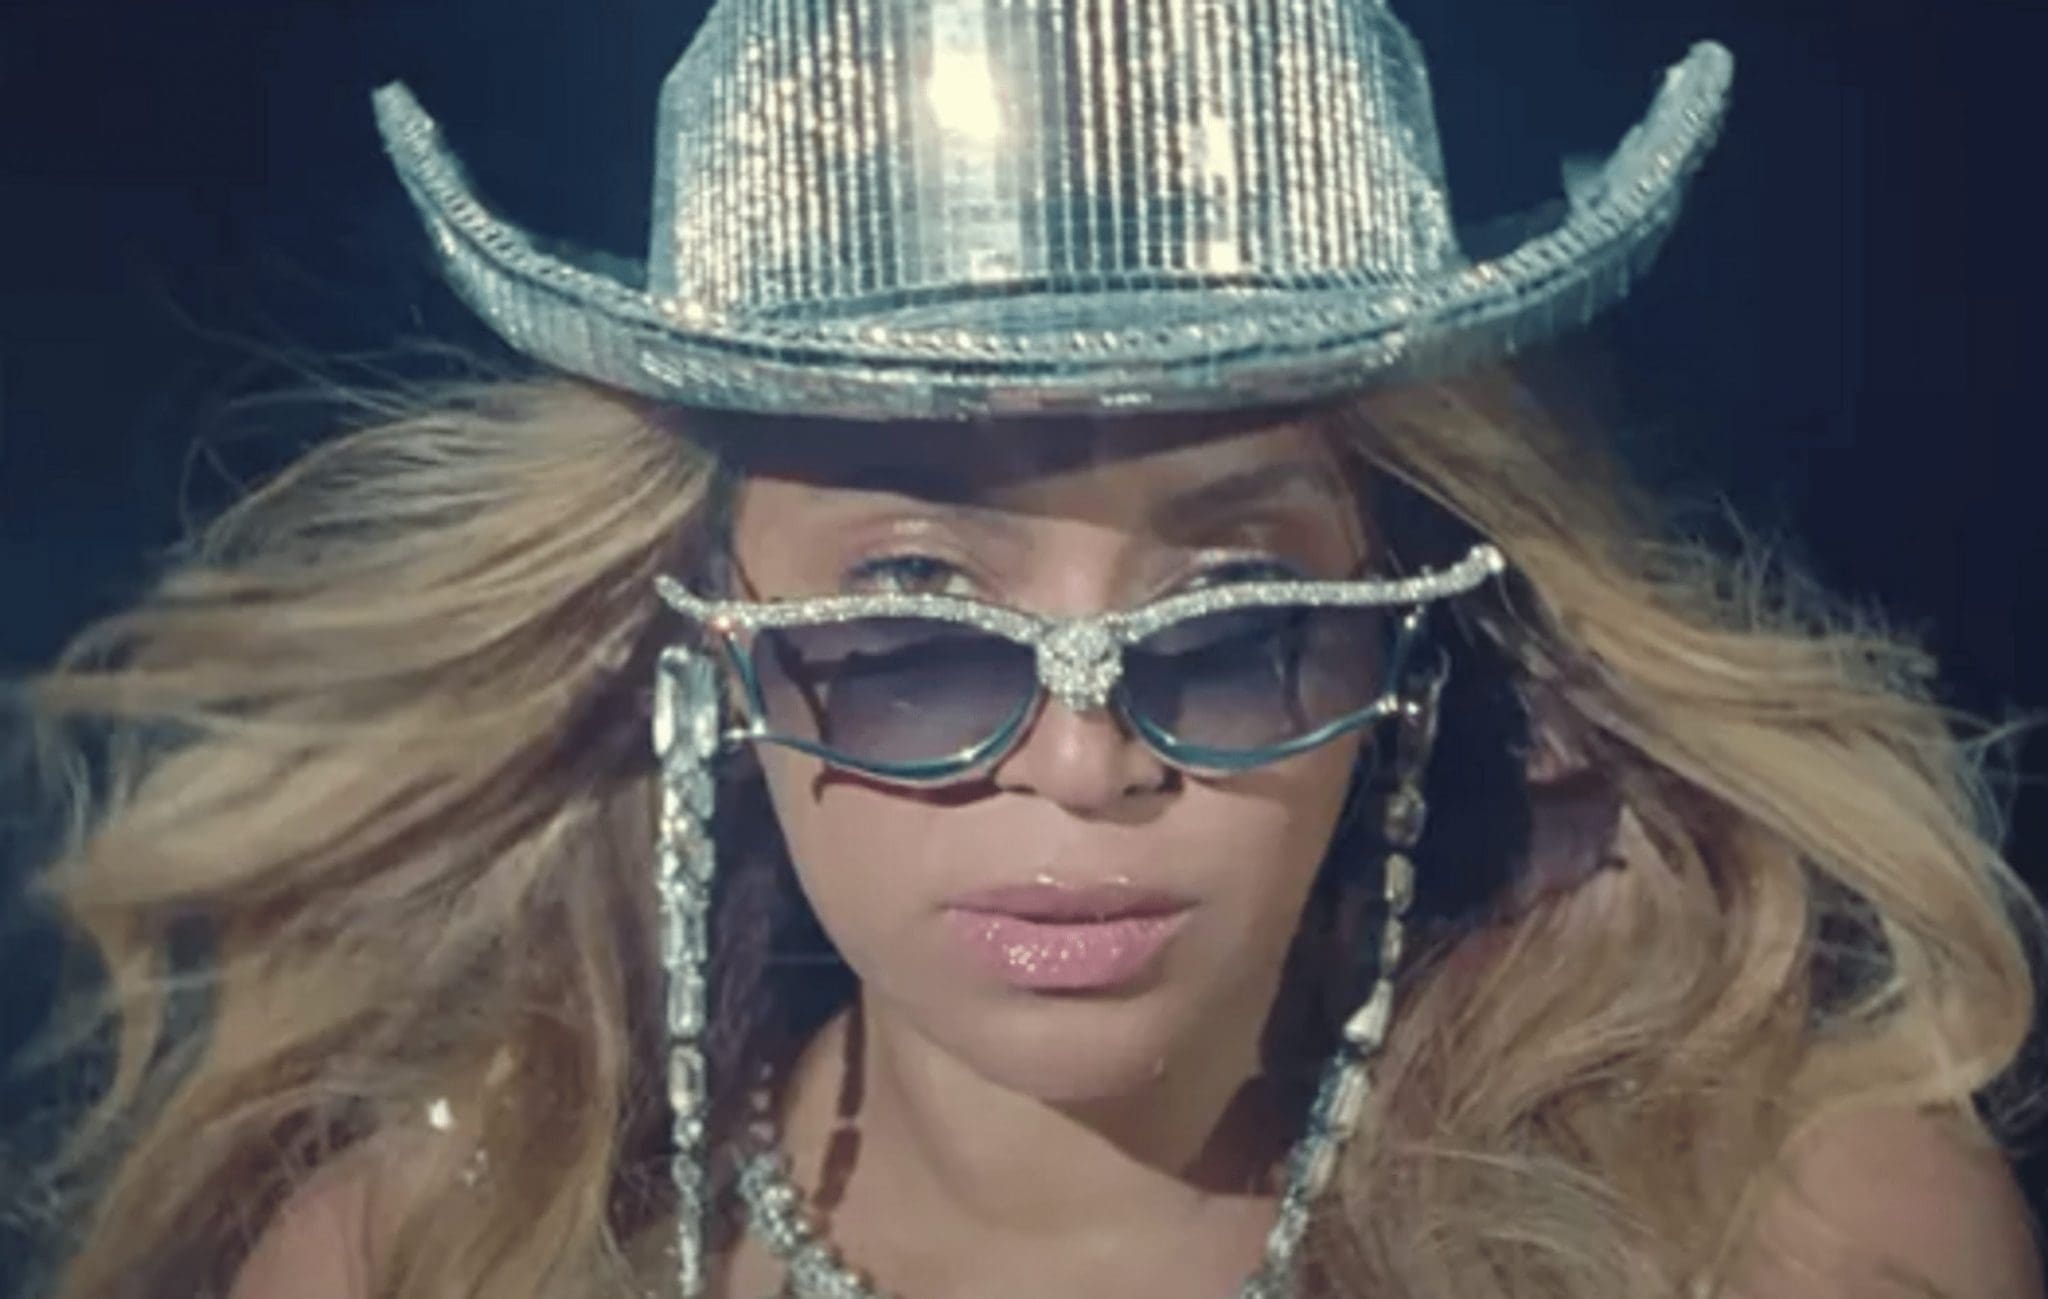 Beyoncé's Renaissance Release Is Becoming More Covert